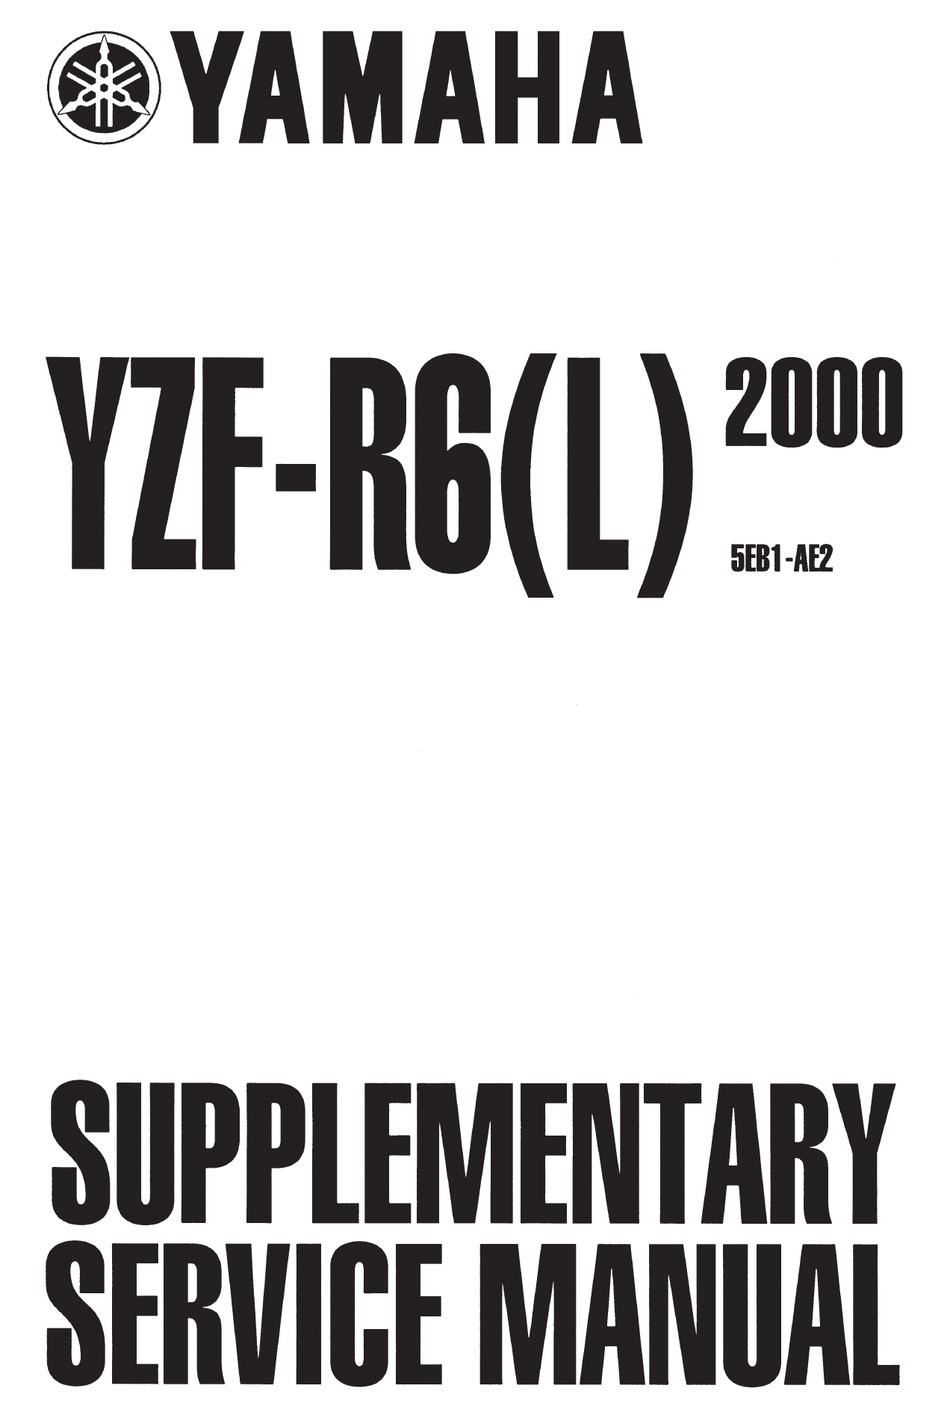 YAMAHA YZF-R6 L 2000 SERVICE MANUAL Pdf Download | ManualsLib  2000 Yamaha R6 Wiring Harness Diagram    ManualsLib